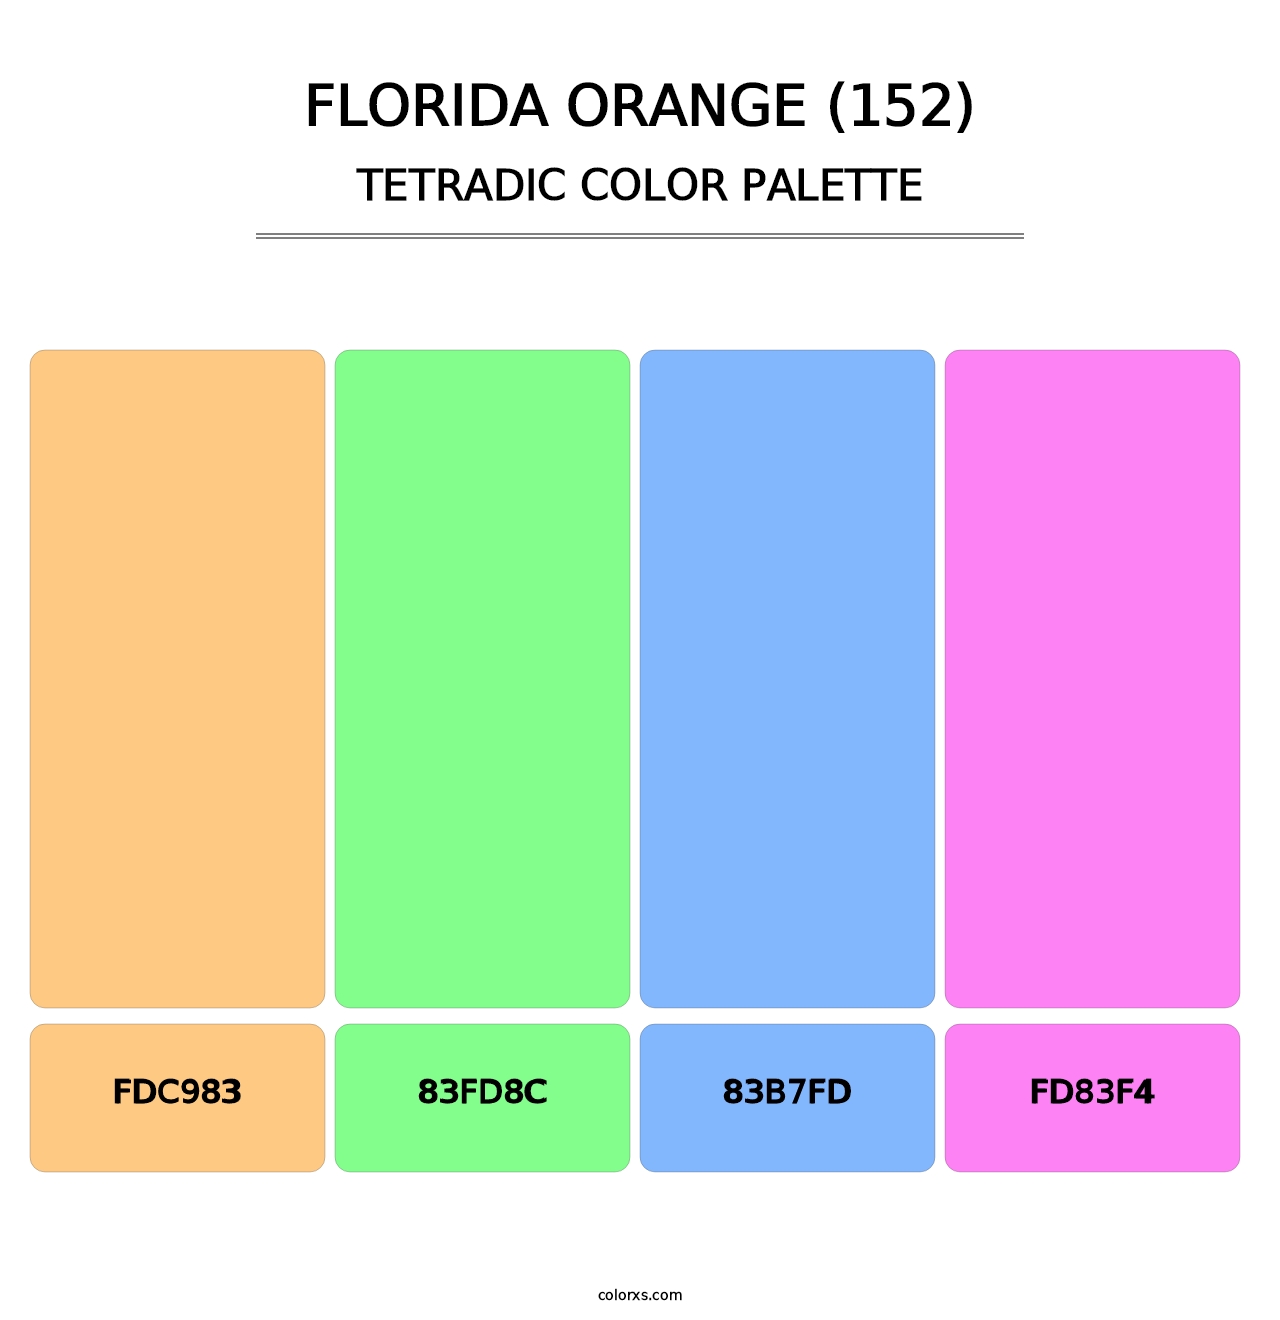 Florida Orange (152) - Tetradic Color Palette